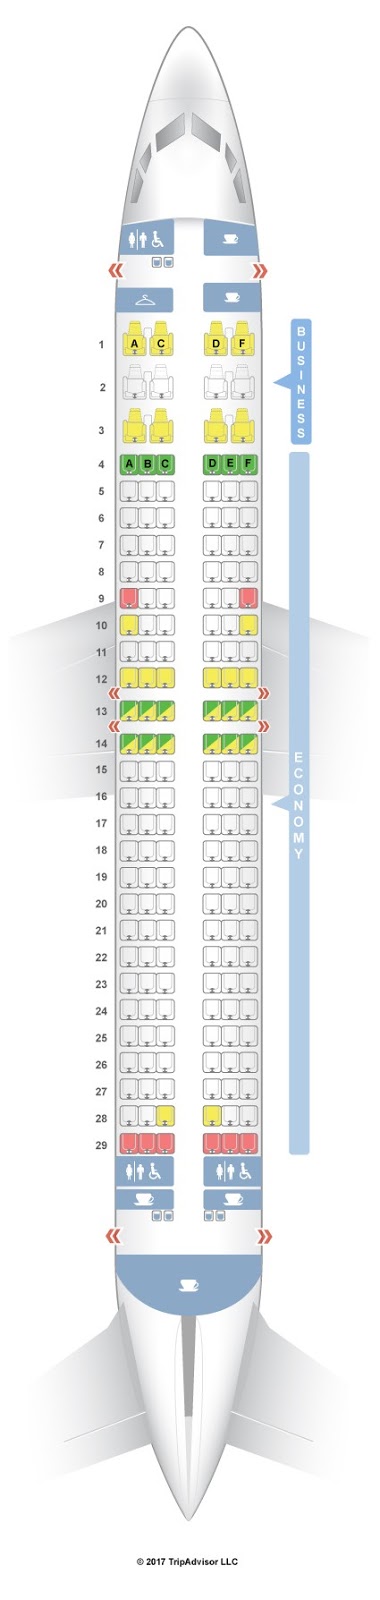 Awesome Qantas 737-800 Seat Map